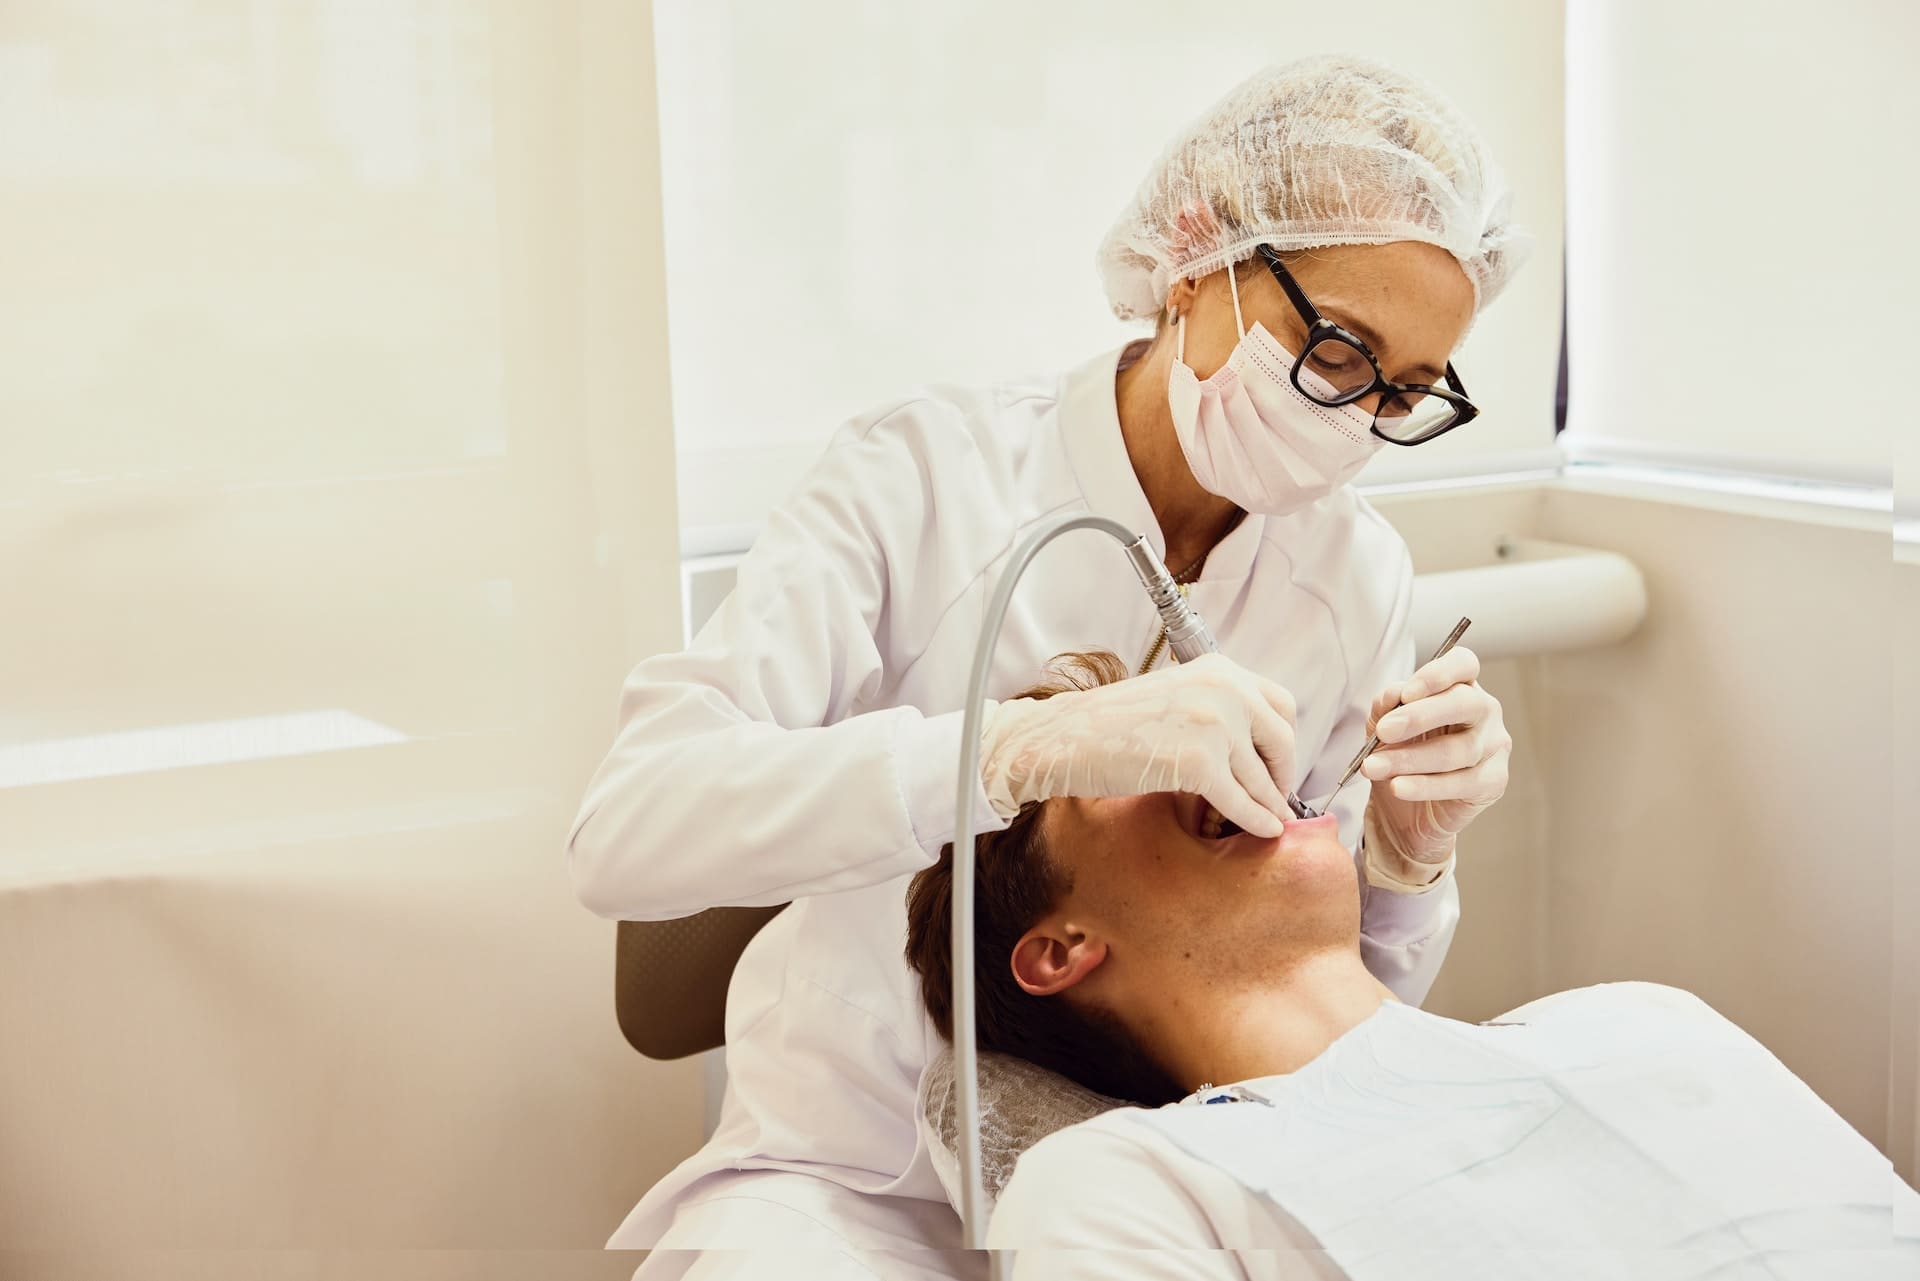 Patient undergoing dental implant surgery